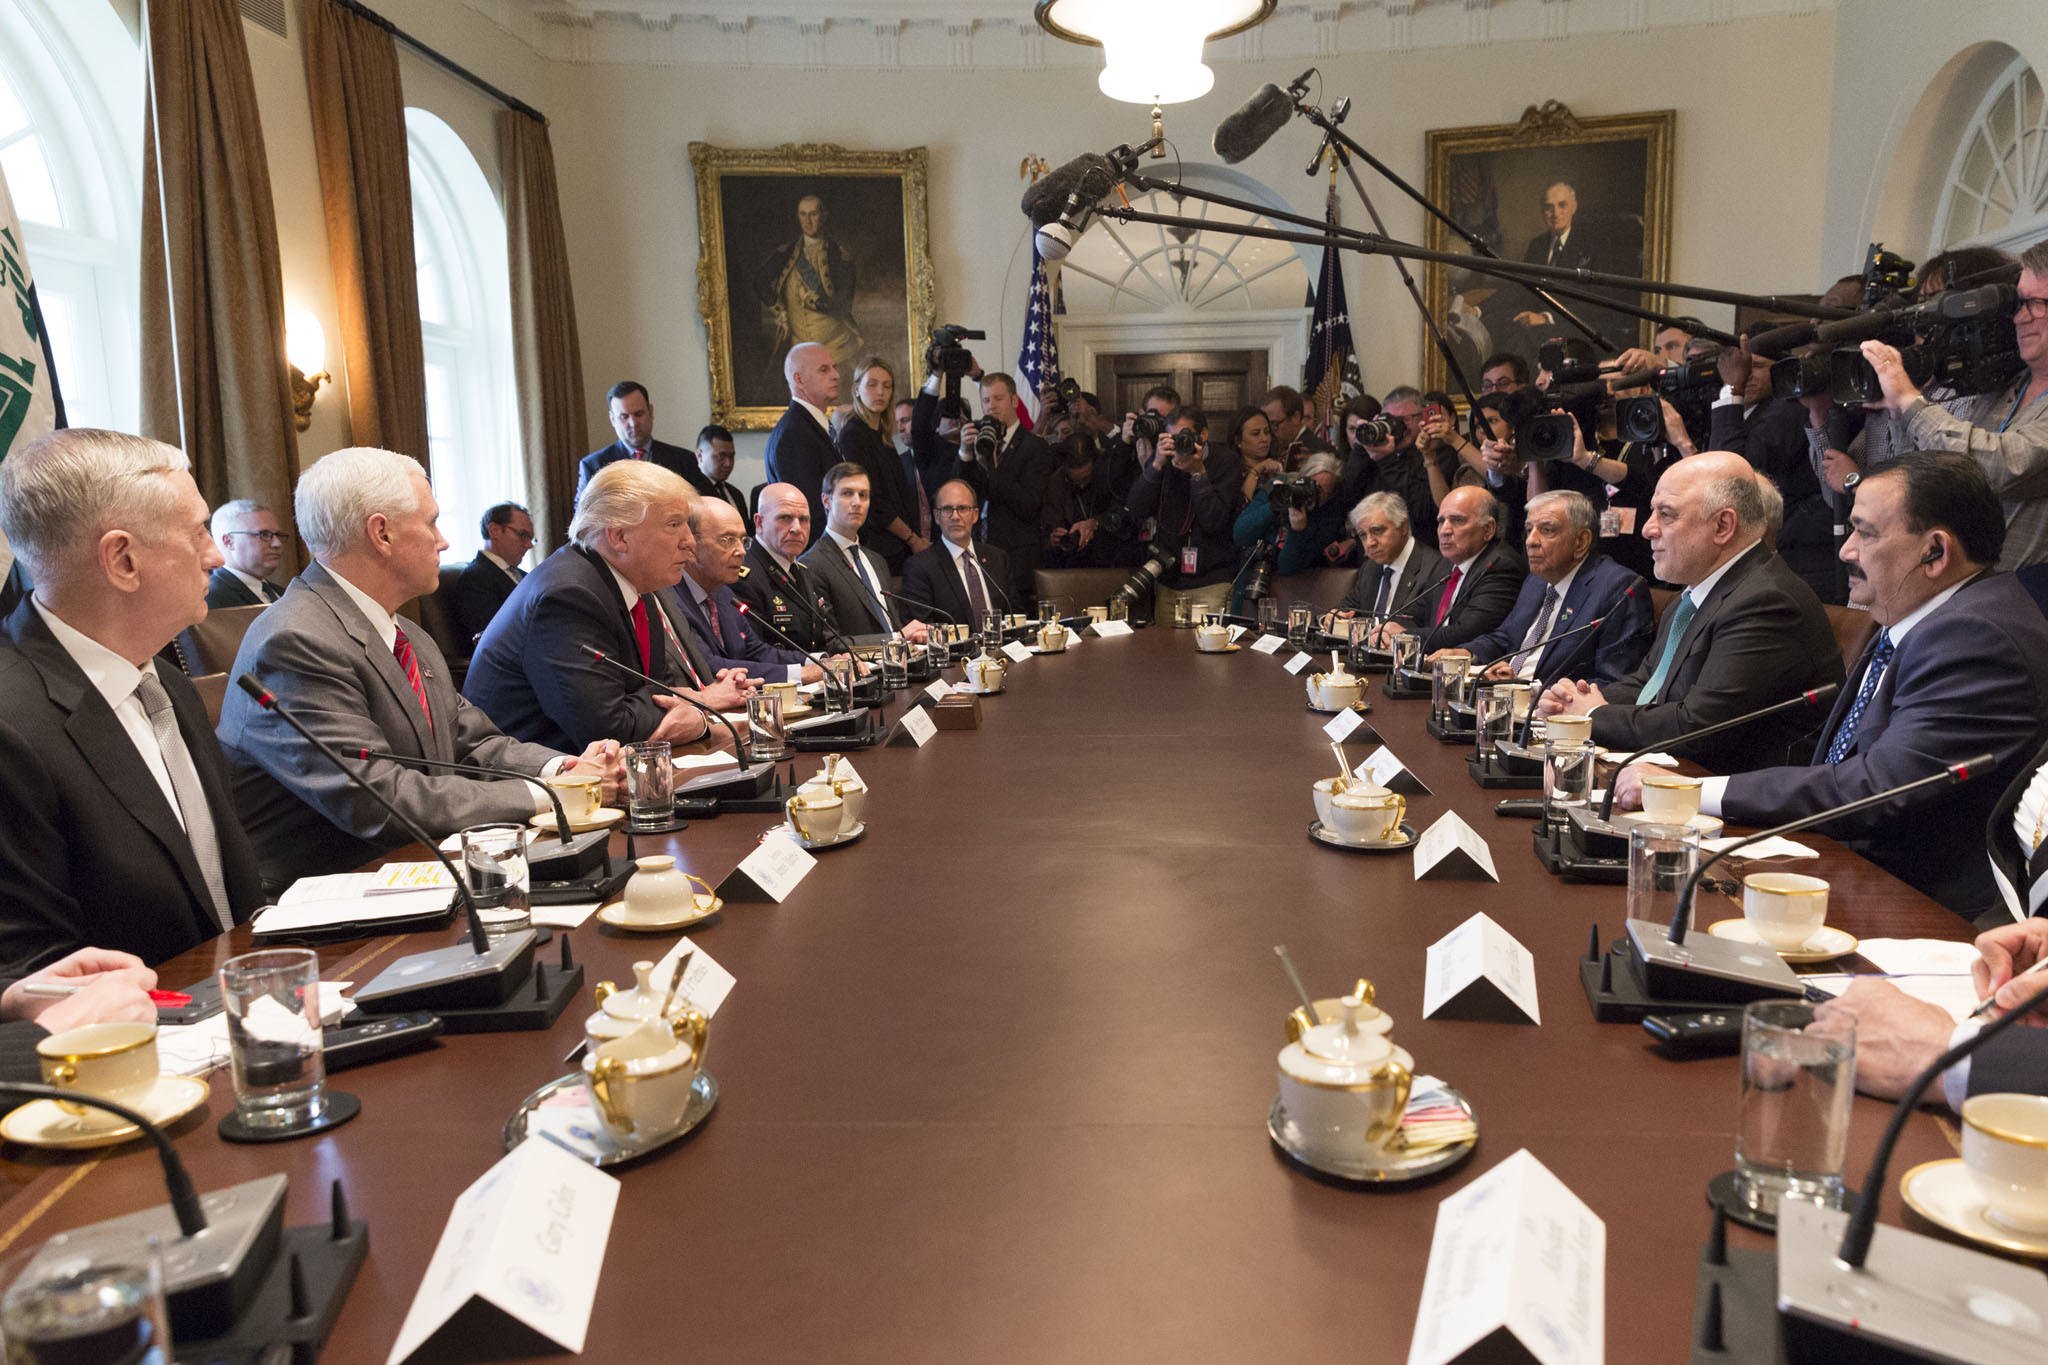 Trump and cabinet secretaries